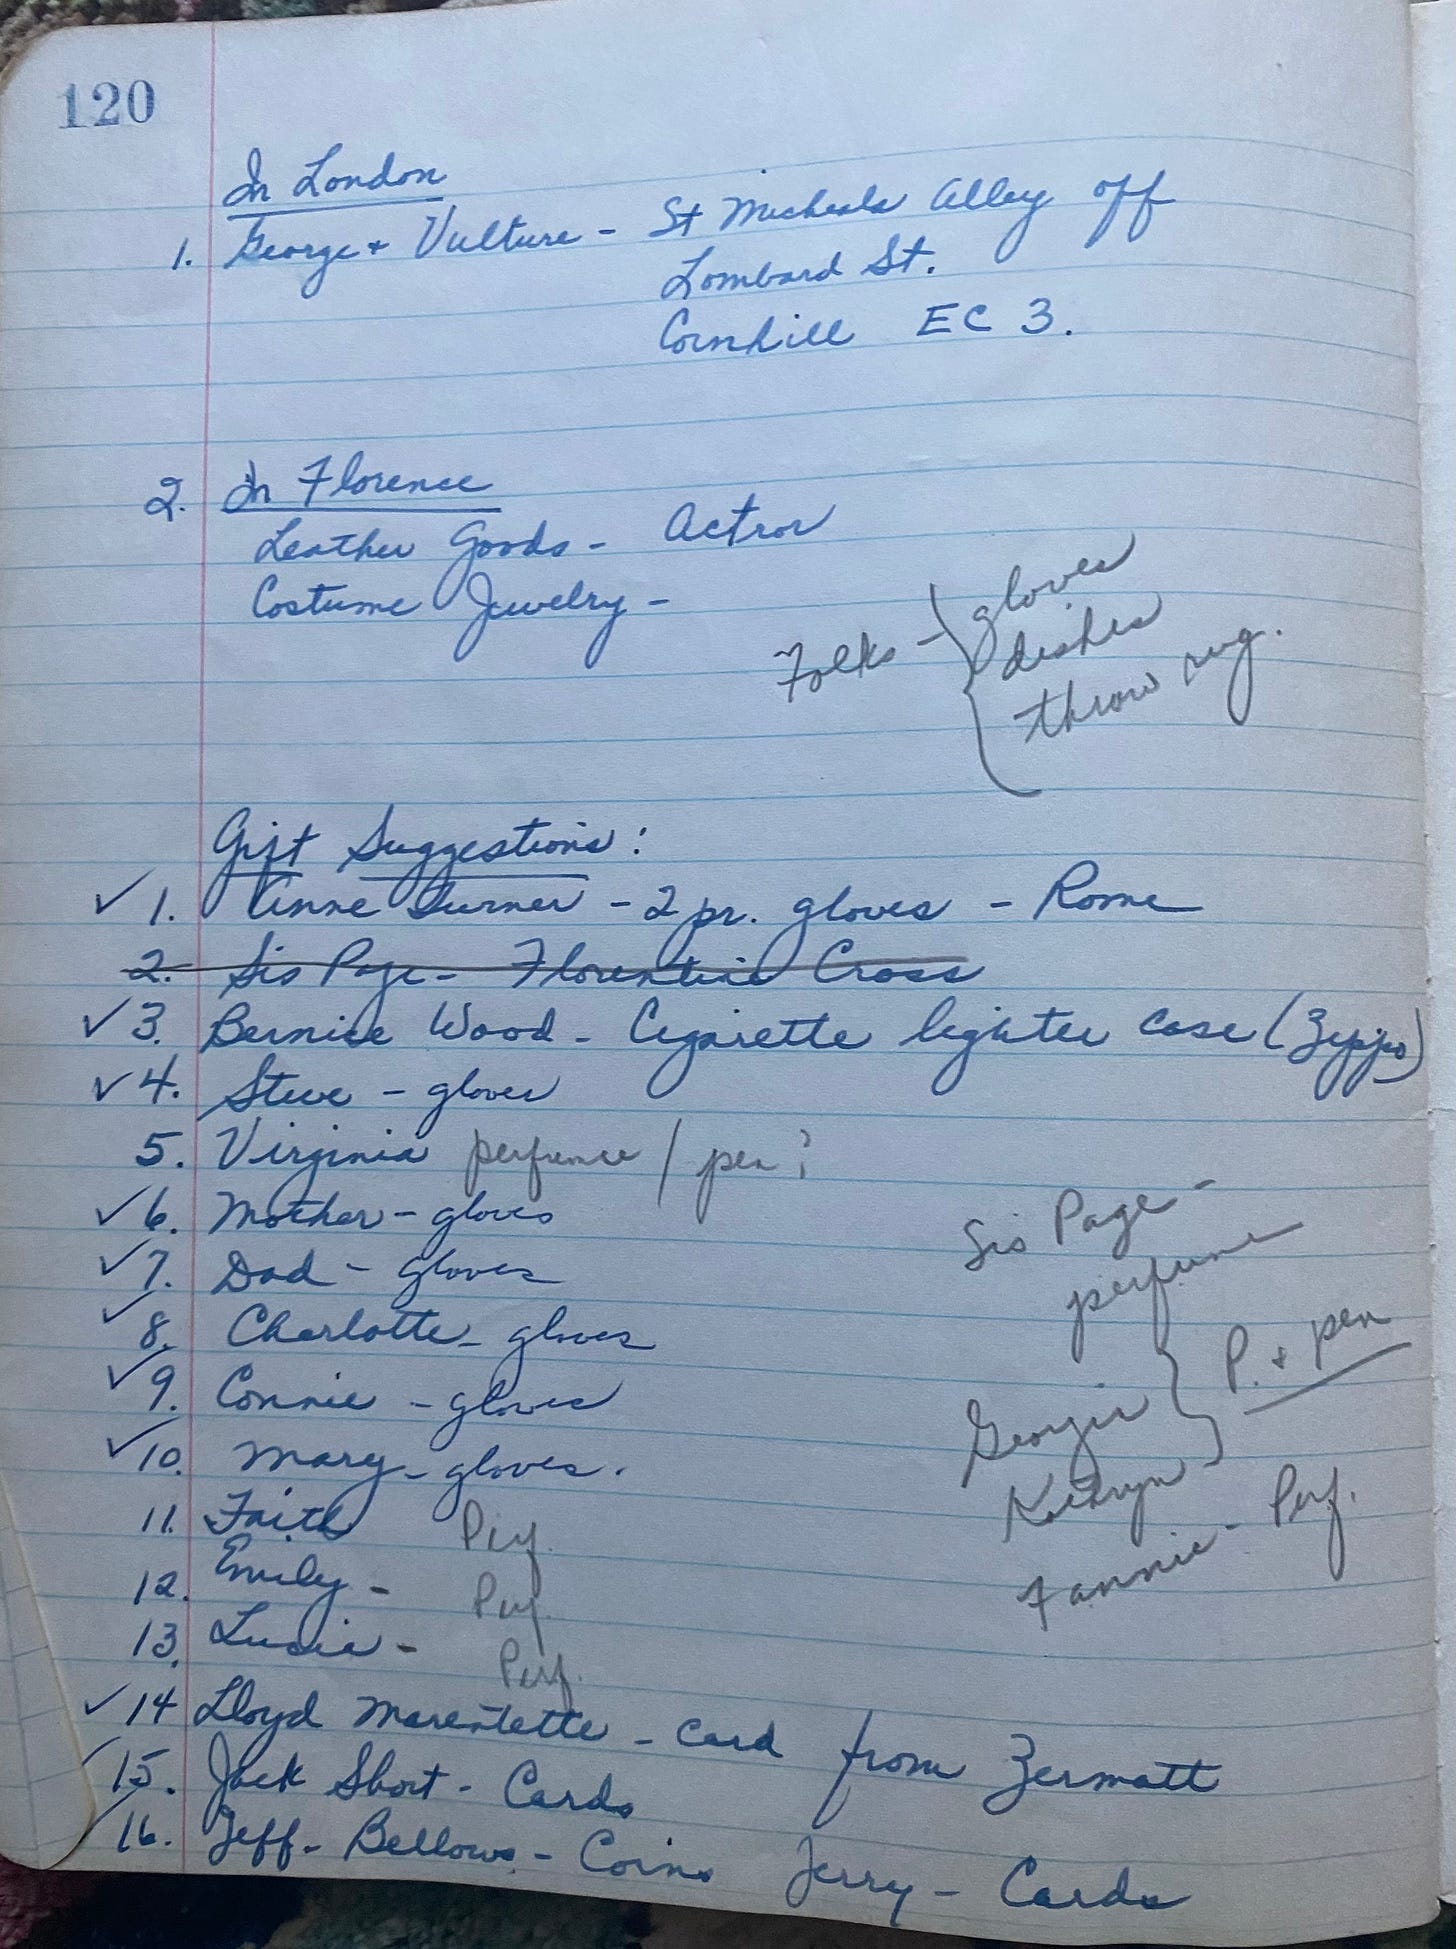 Handwritten list of gift ideas from a travel journal from 1960